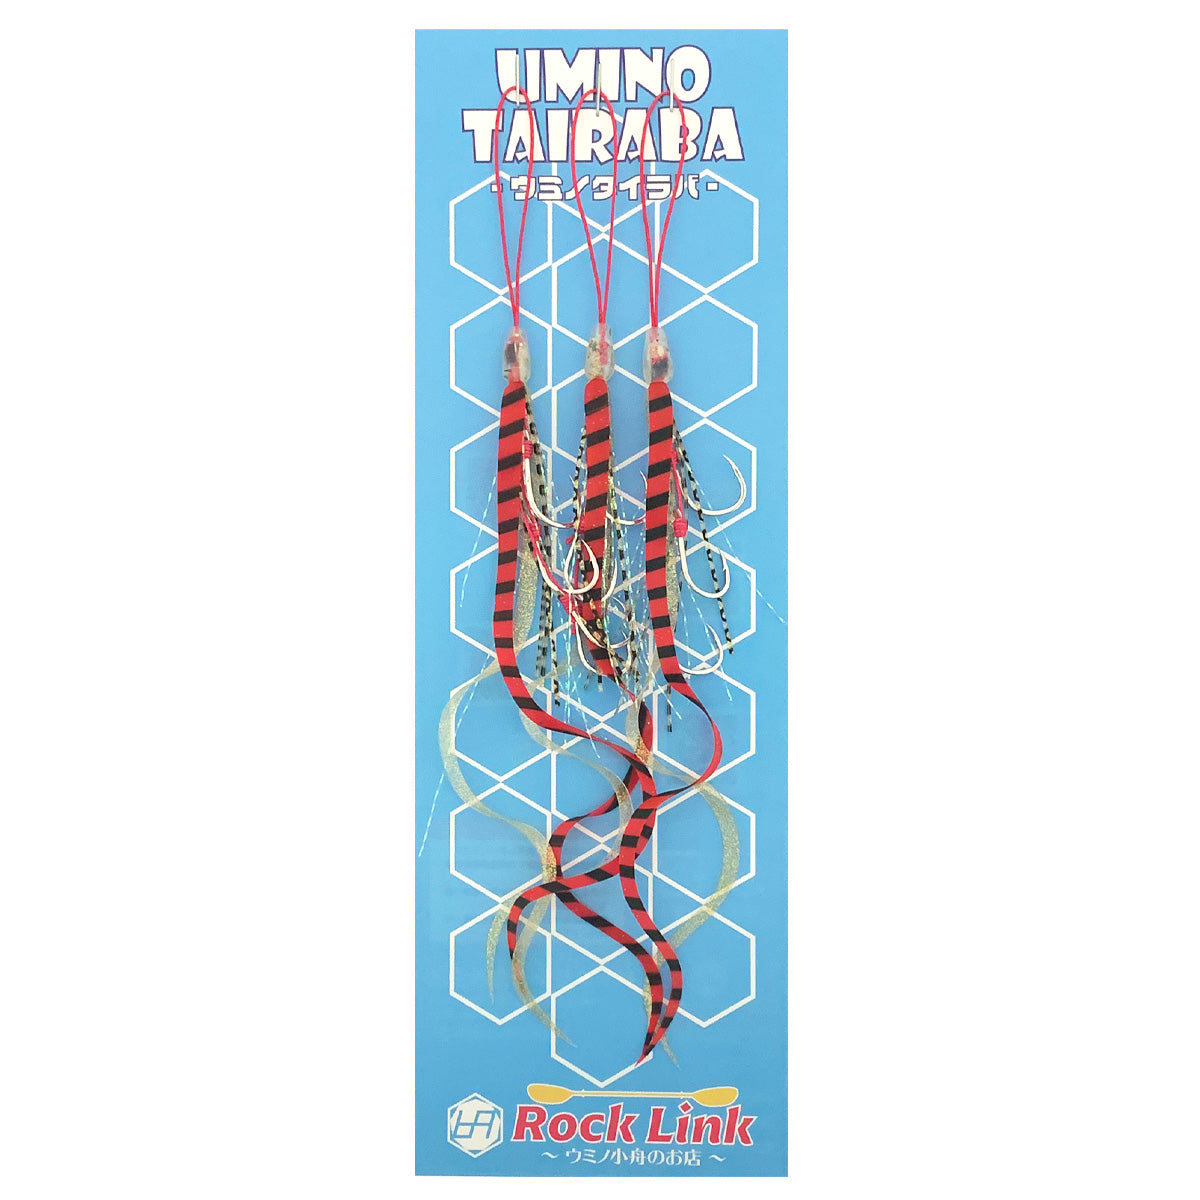 UMINO (ウミノ) タイラバ ビビ 微波動ネクタイ 極細ロングツインカーリー 3本フック 3セット入